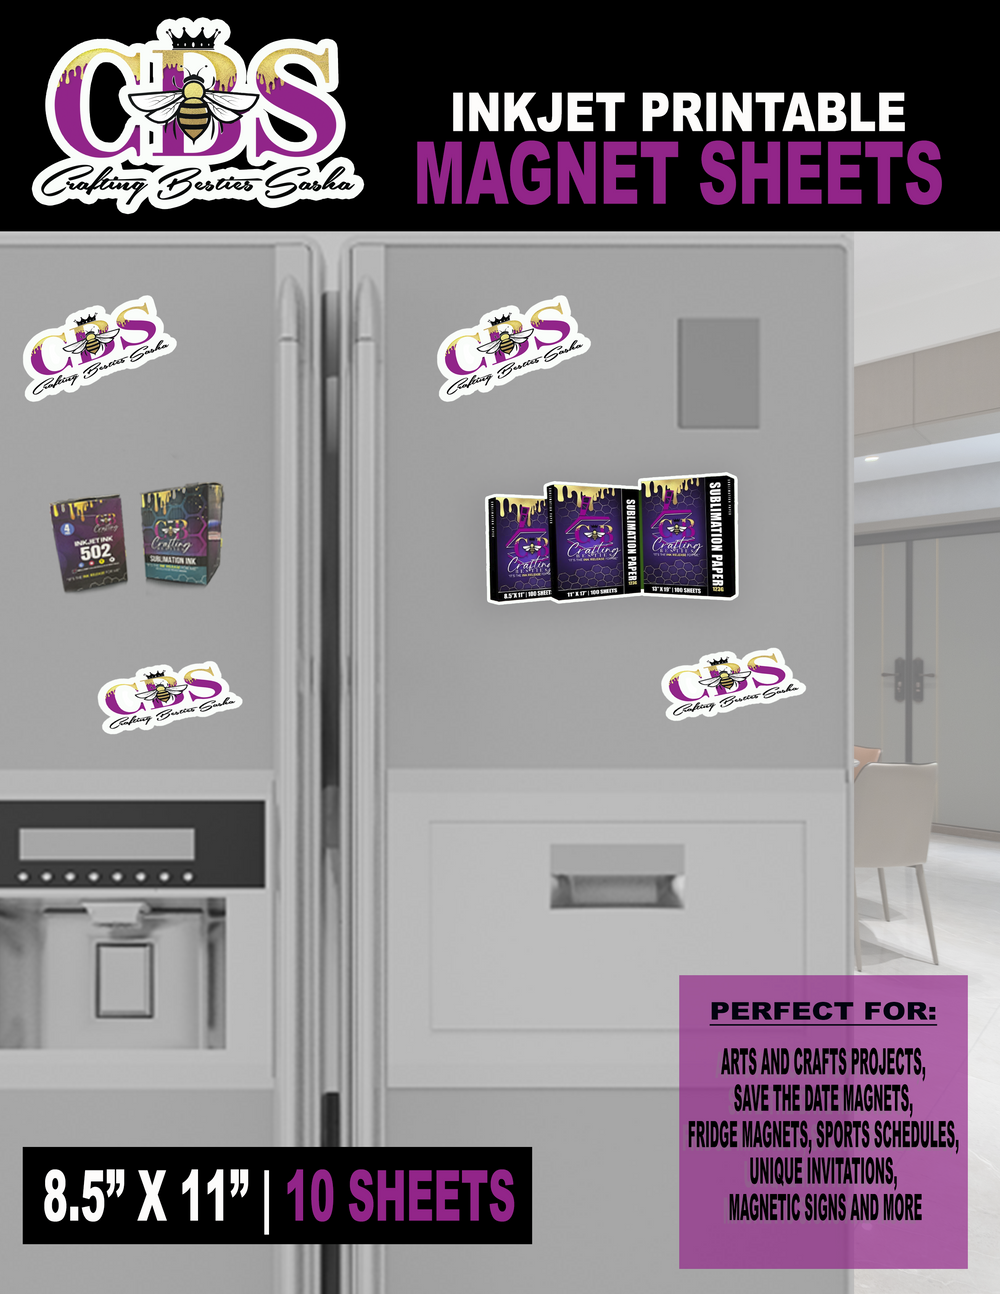 Printable Inkjet Magnetic Sheets